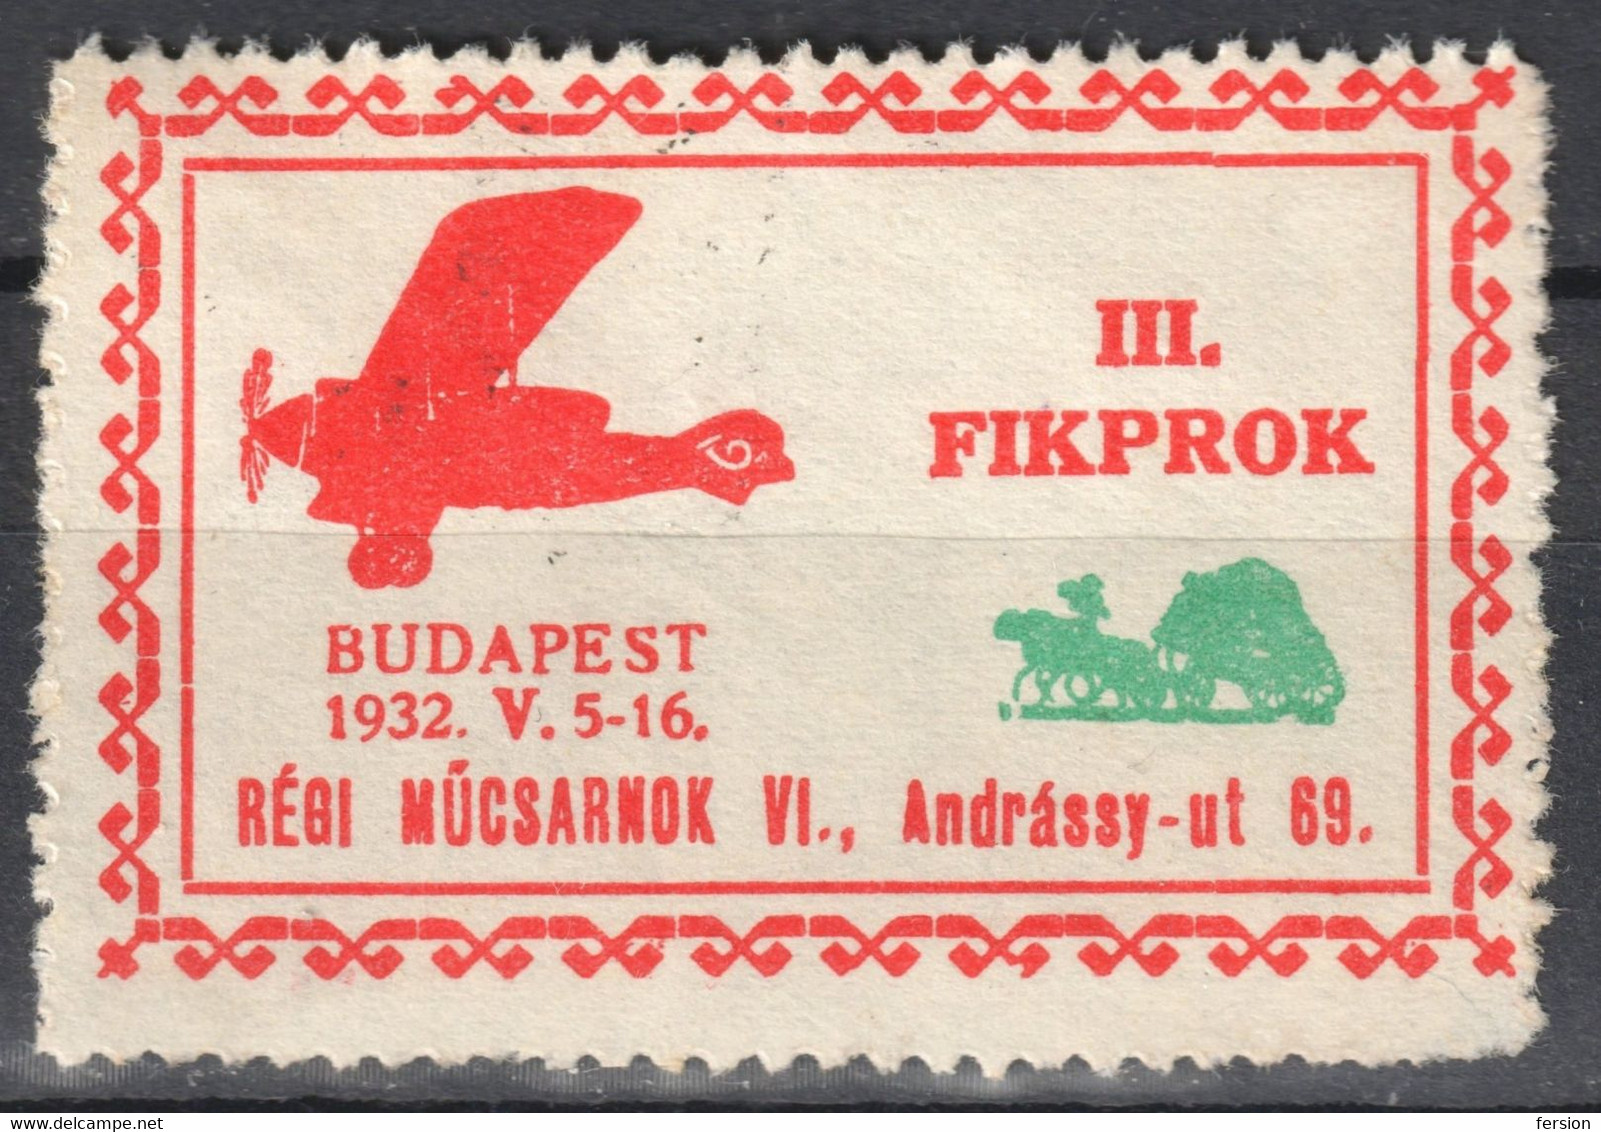 Airplane / Mail Stage Coach / FIKPROK Stamp Philatelic Exhibition CINDERELLA LABEL VIGNETTE Hungary 1932 - Diligences